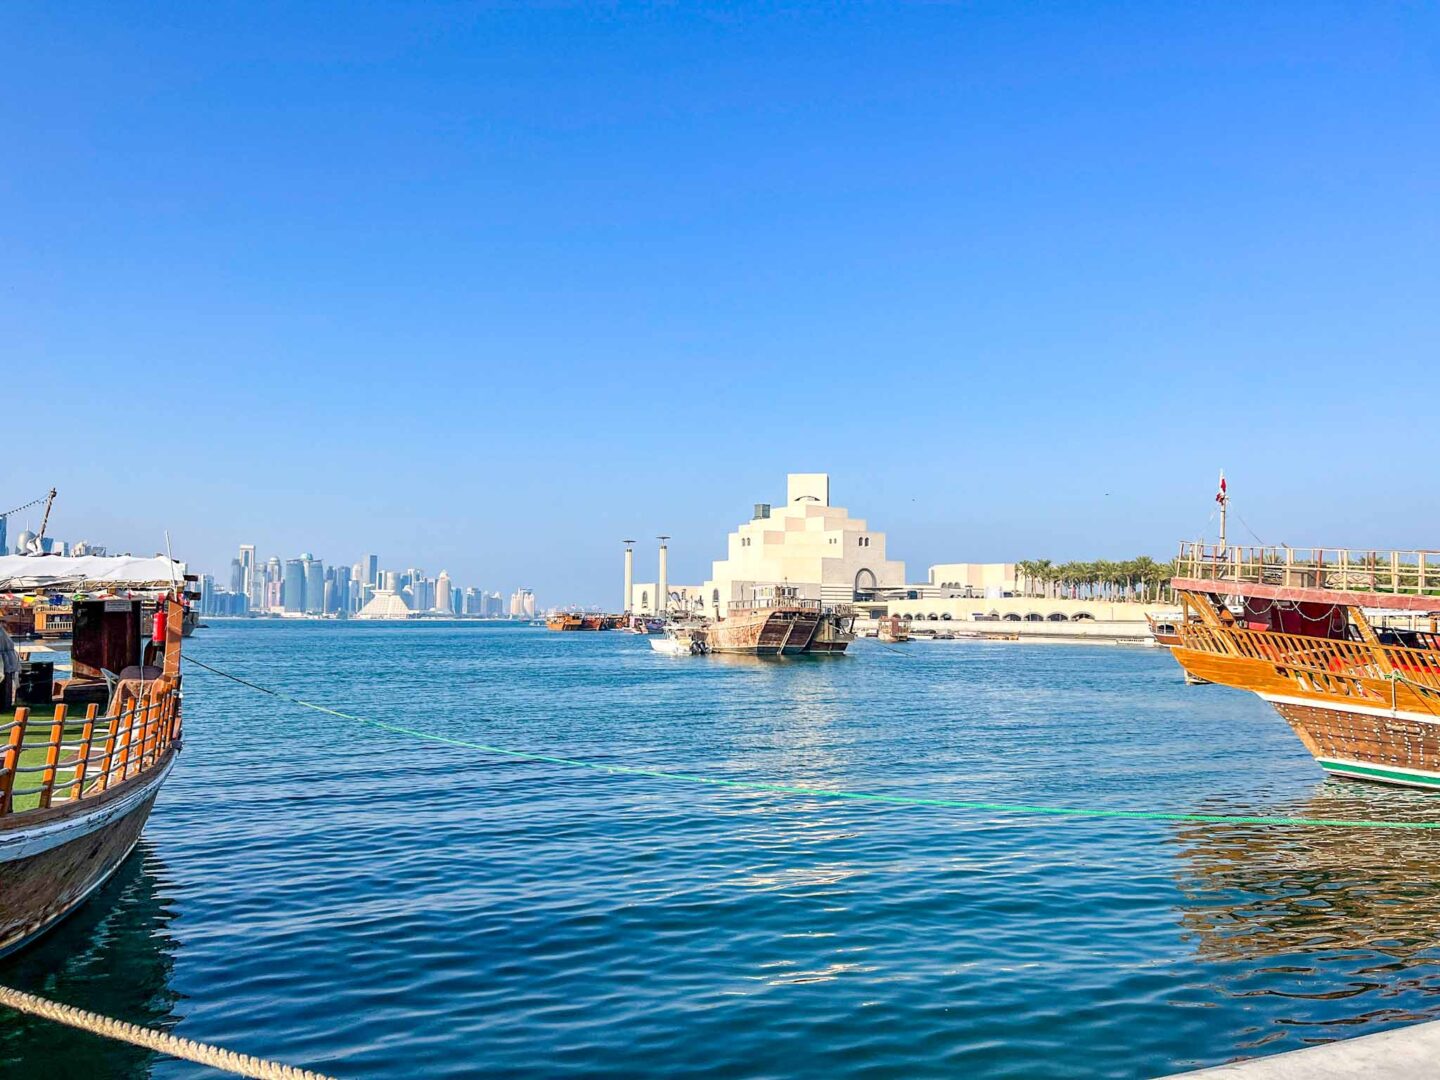 museum of Islamic art from across the water, Doha itinerary, Qatar itinerary